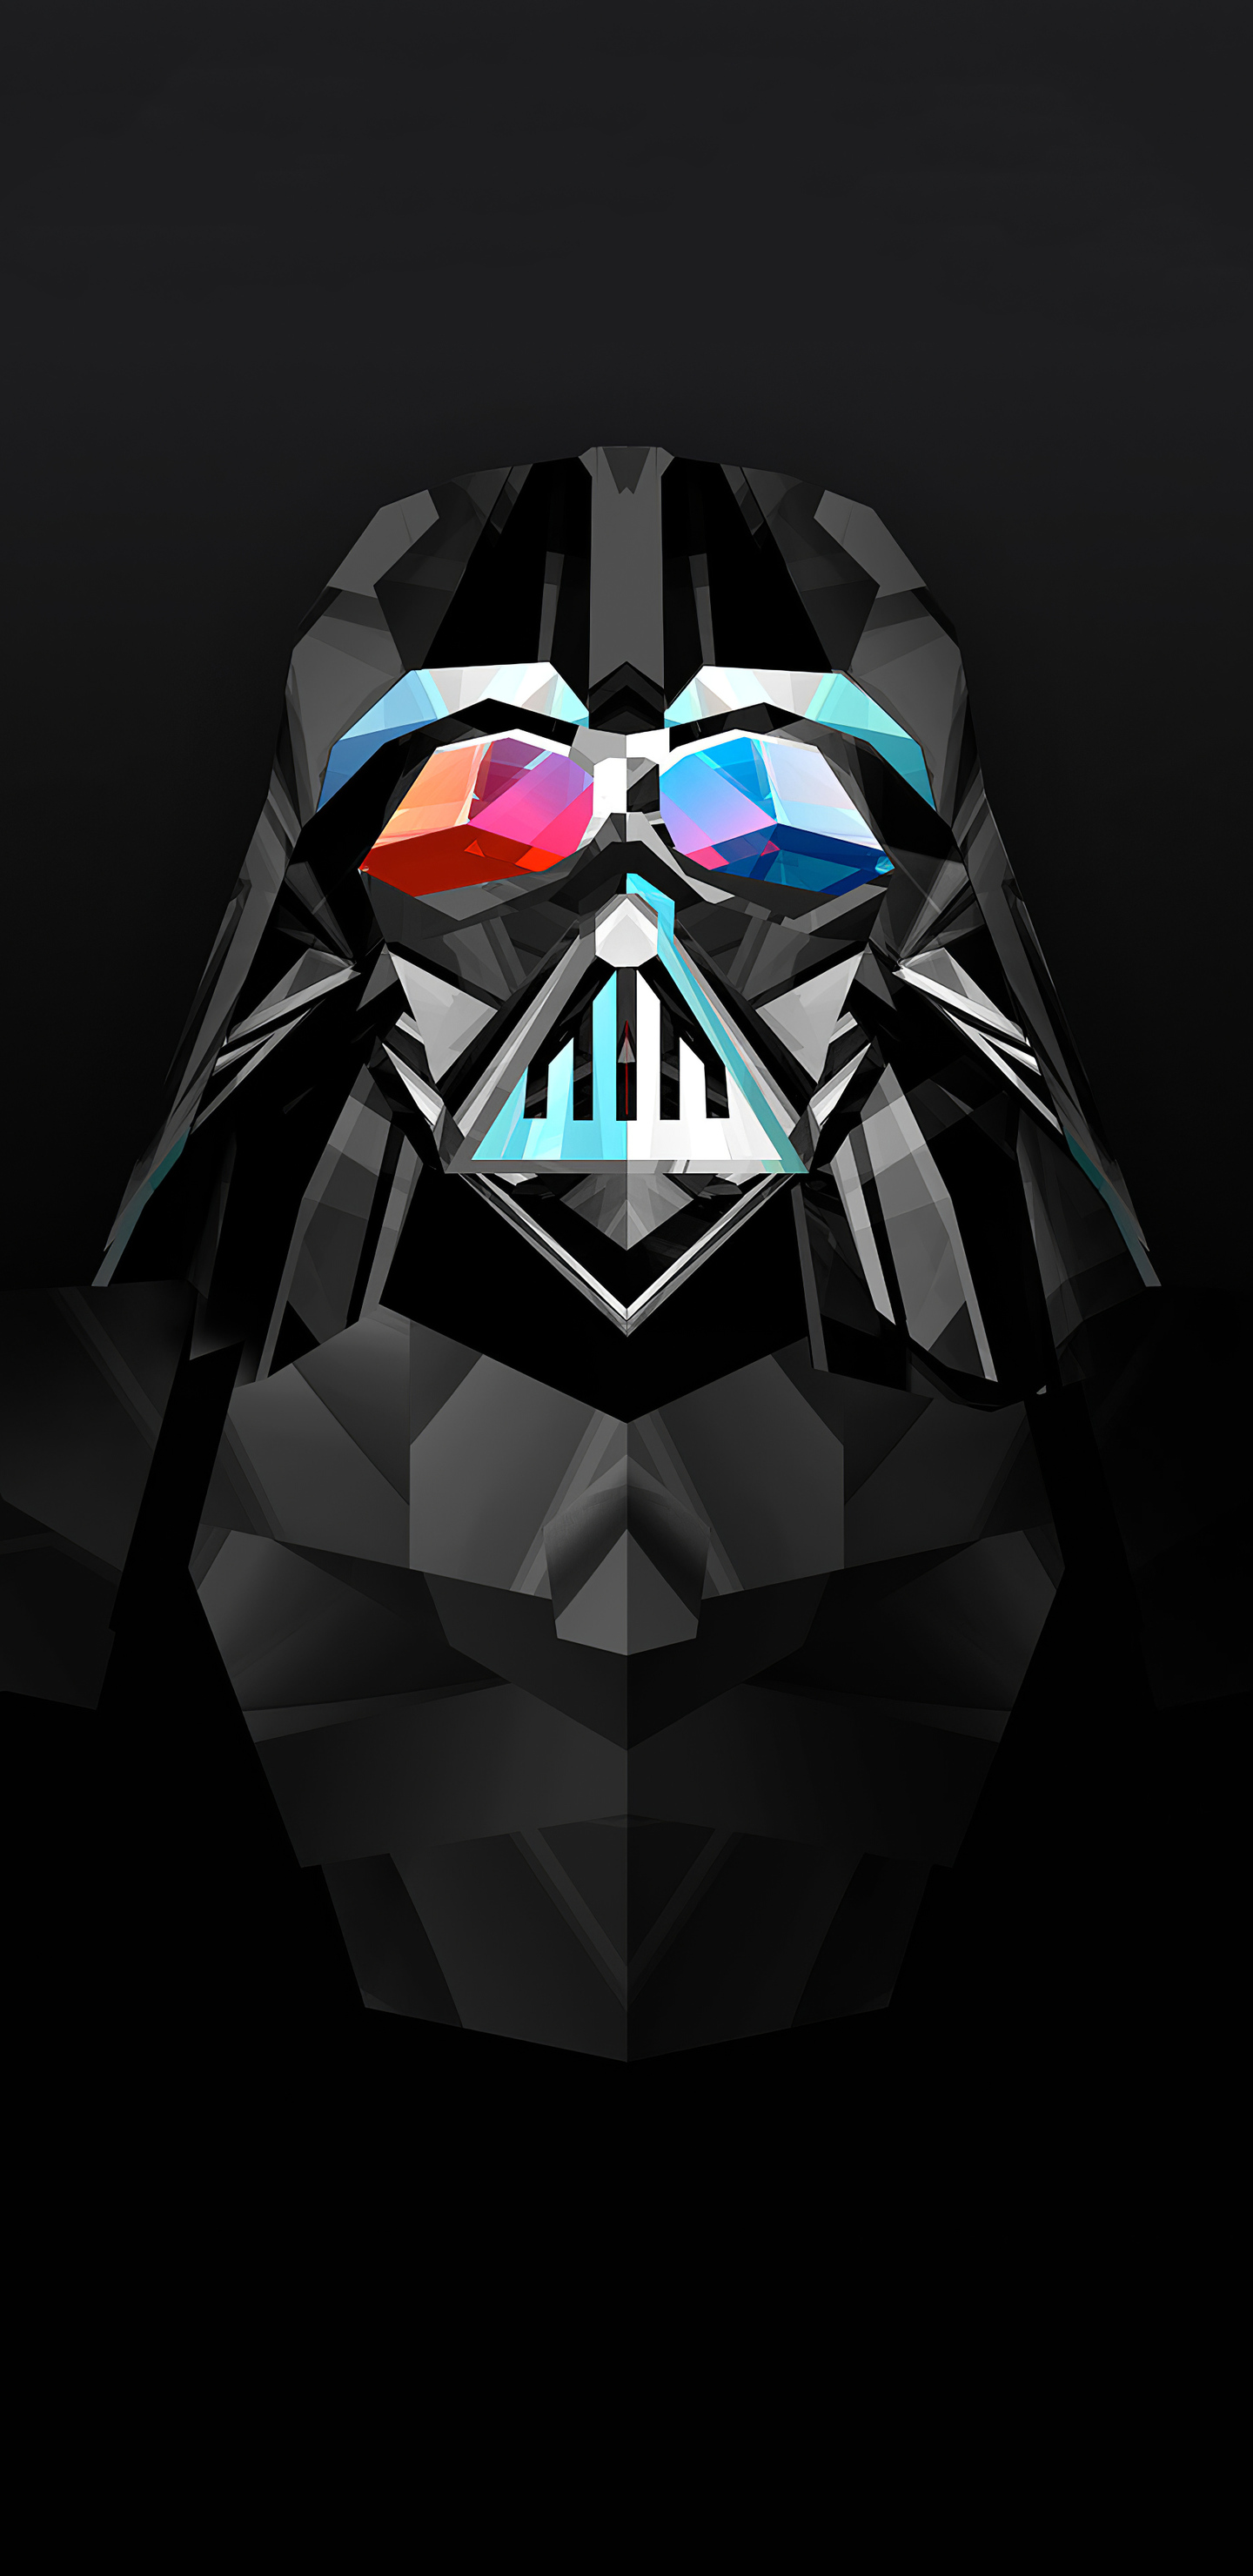 Artwork Darth Vader From Star Wars Wallpapers